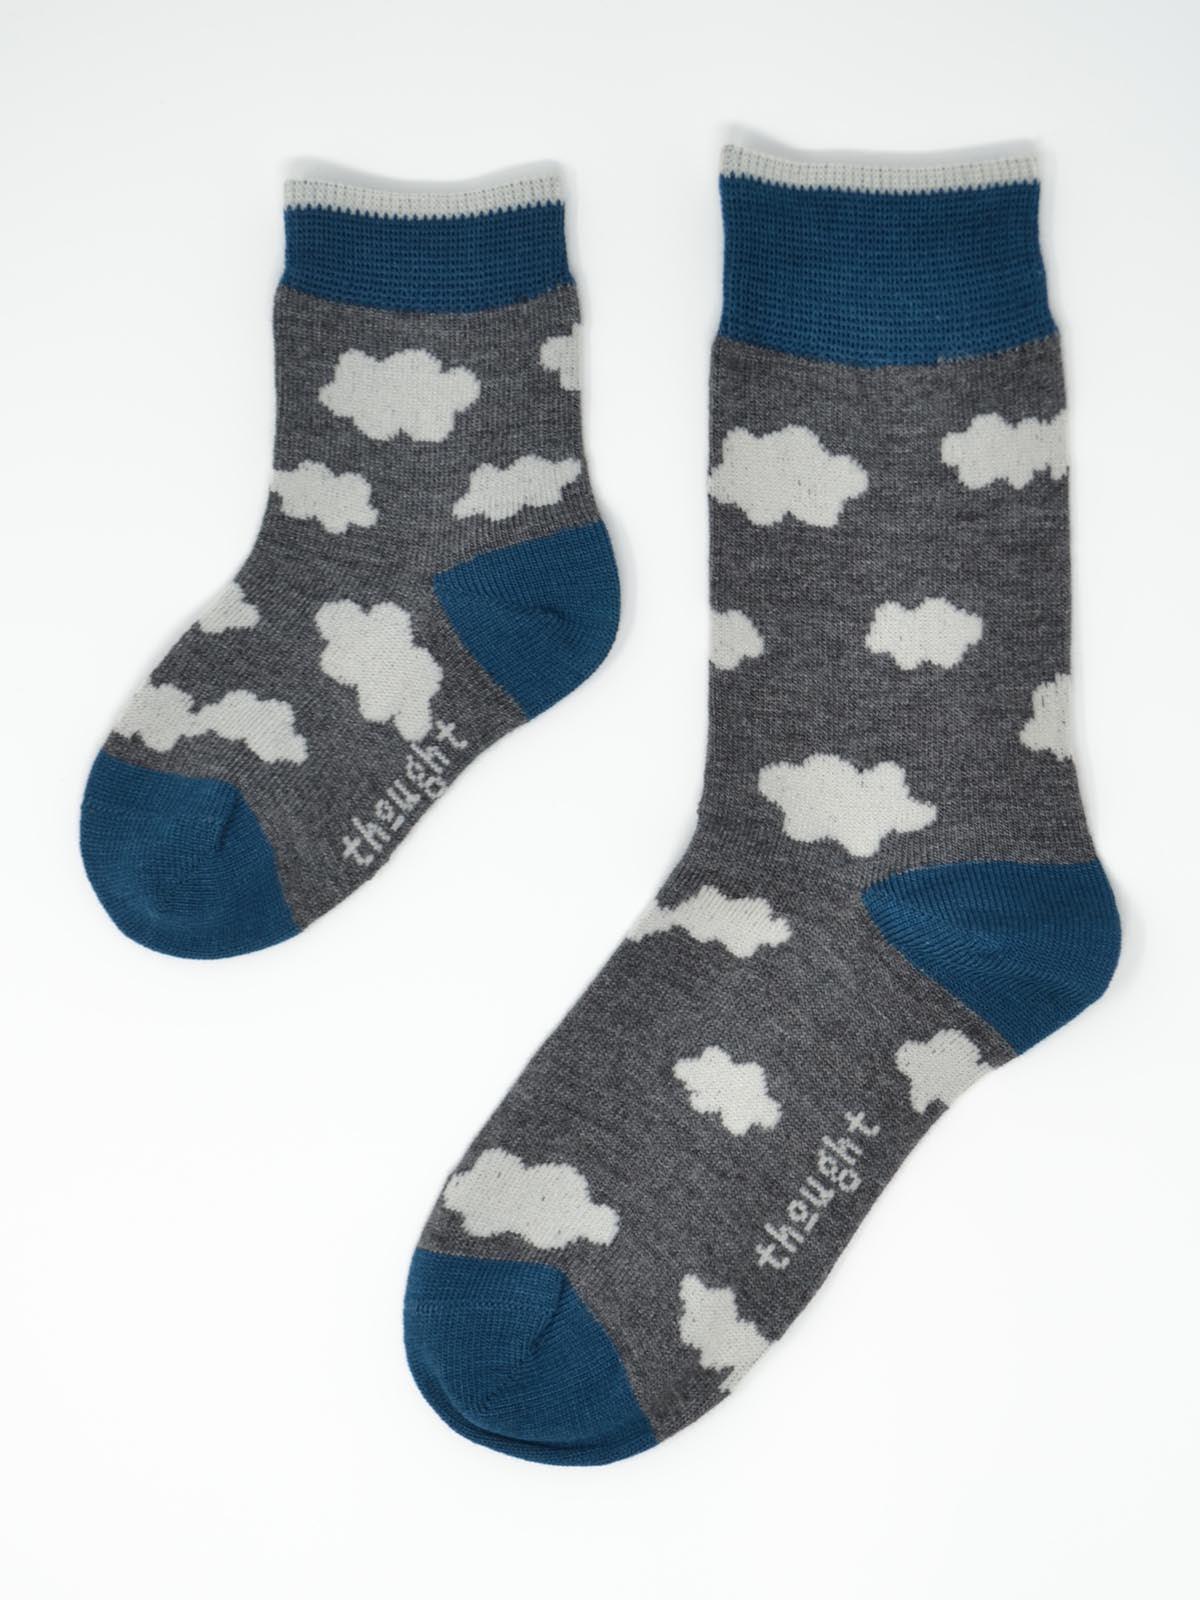 Overcast Baby Bamboo Weather Socks Gift - Thought Clothing UK